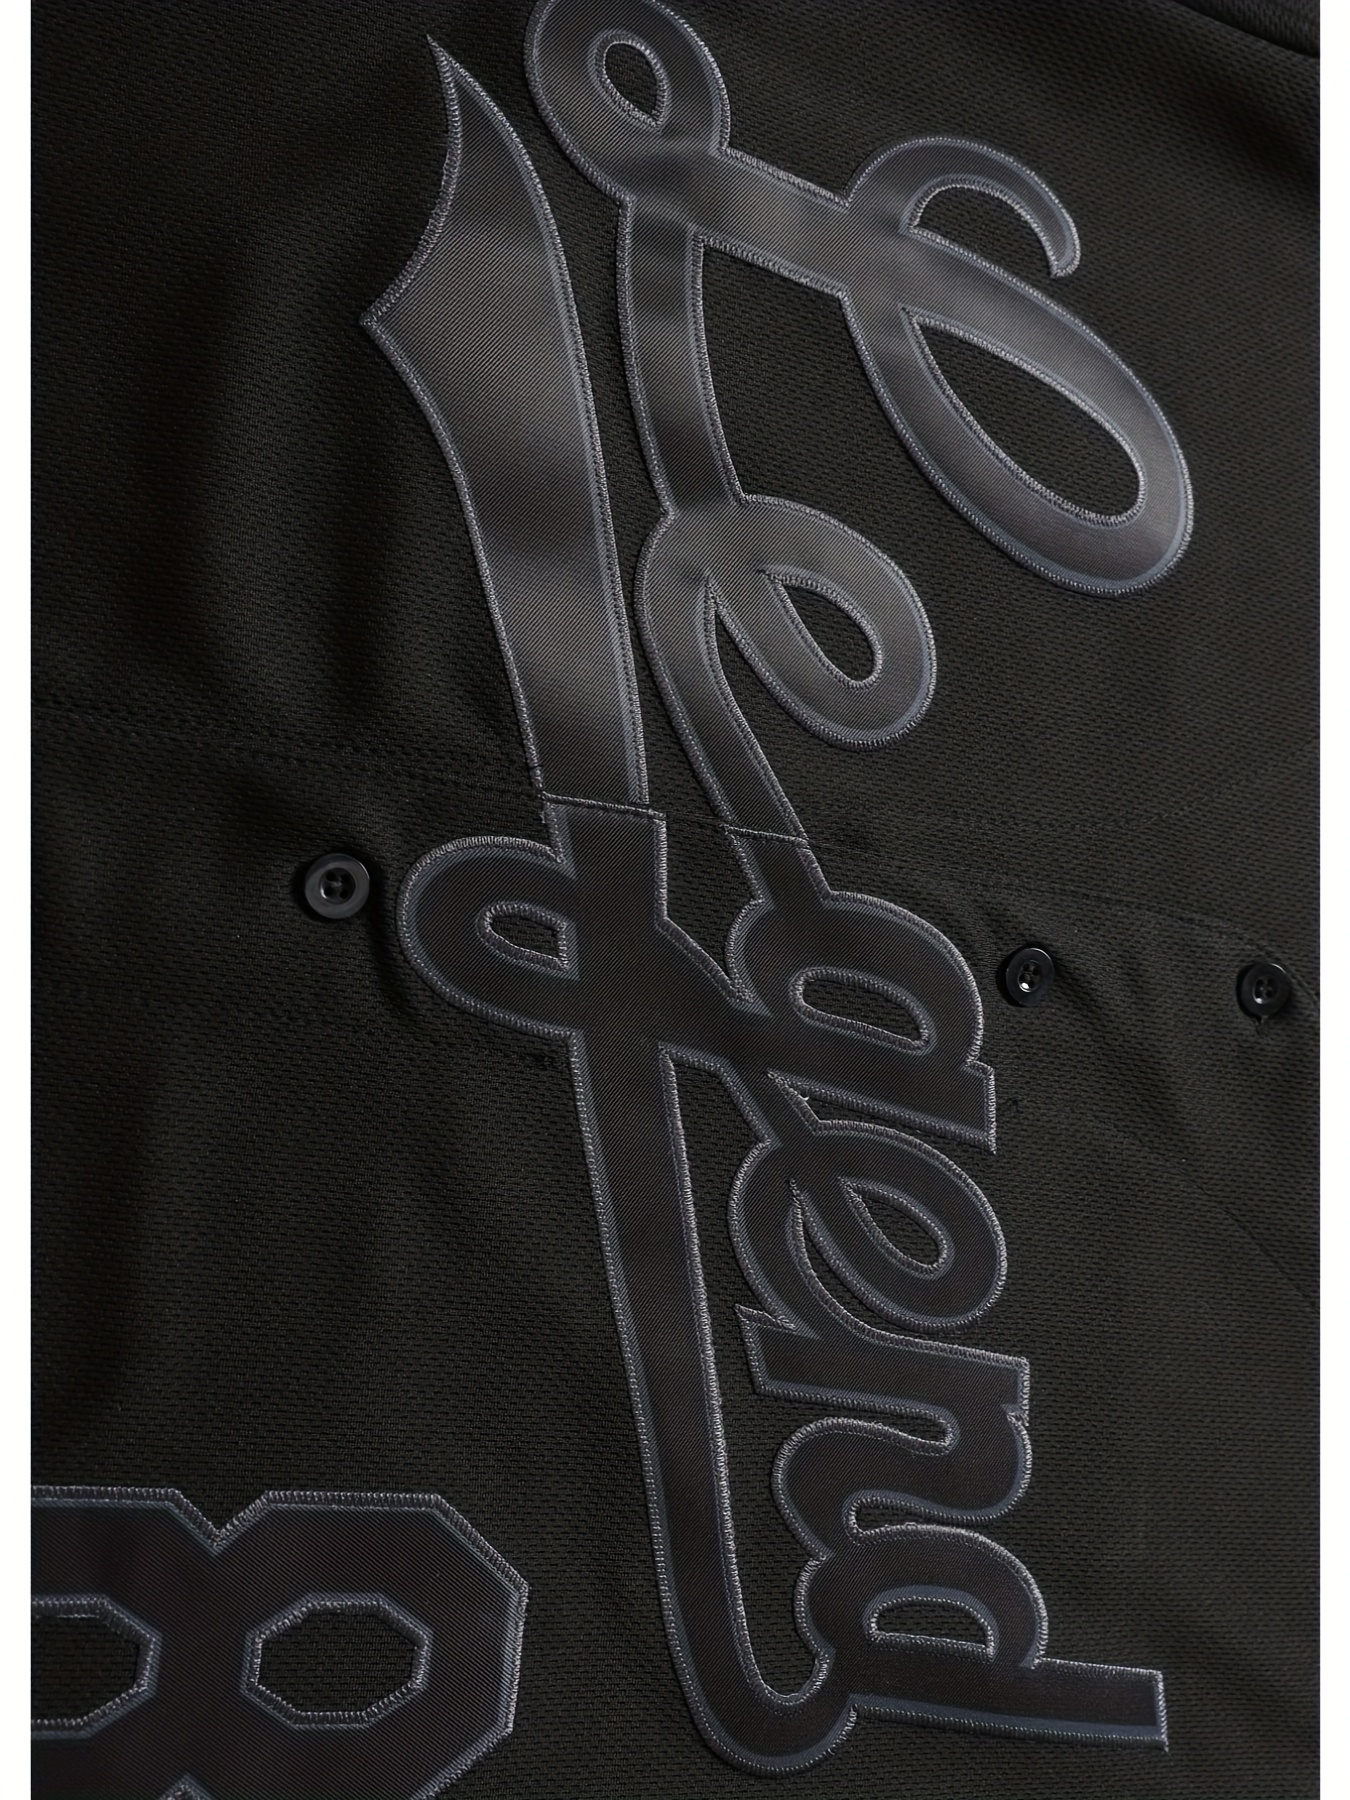 Men's Legend #824 Baseball Jersey, Retro Classic Baseball Shirt